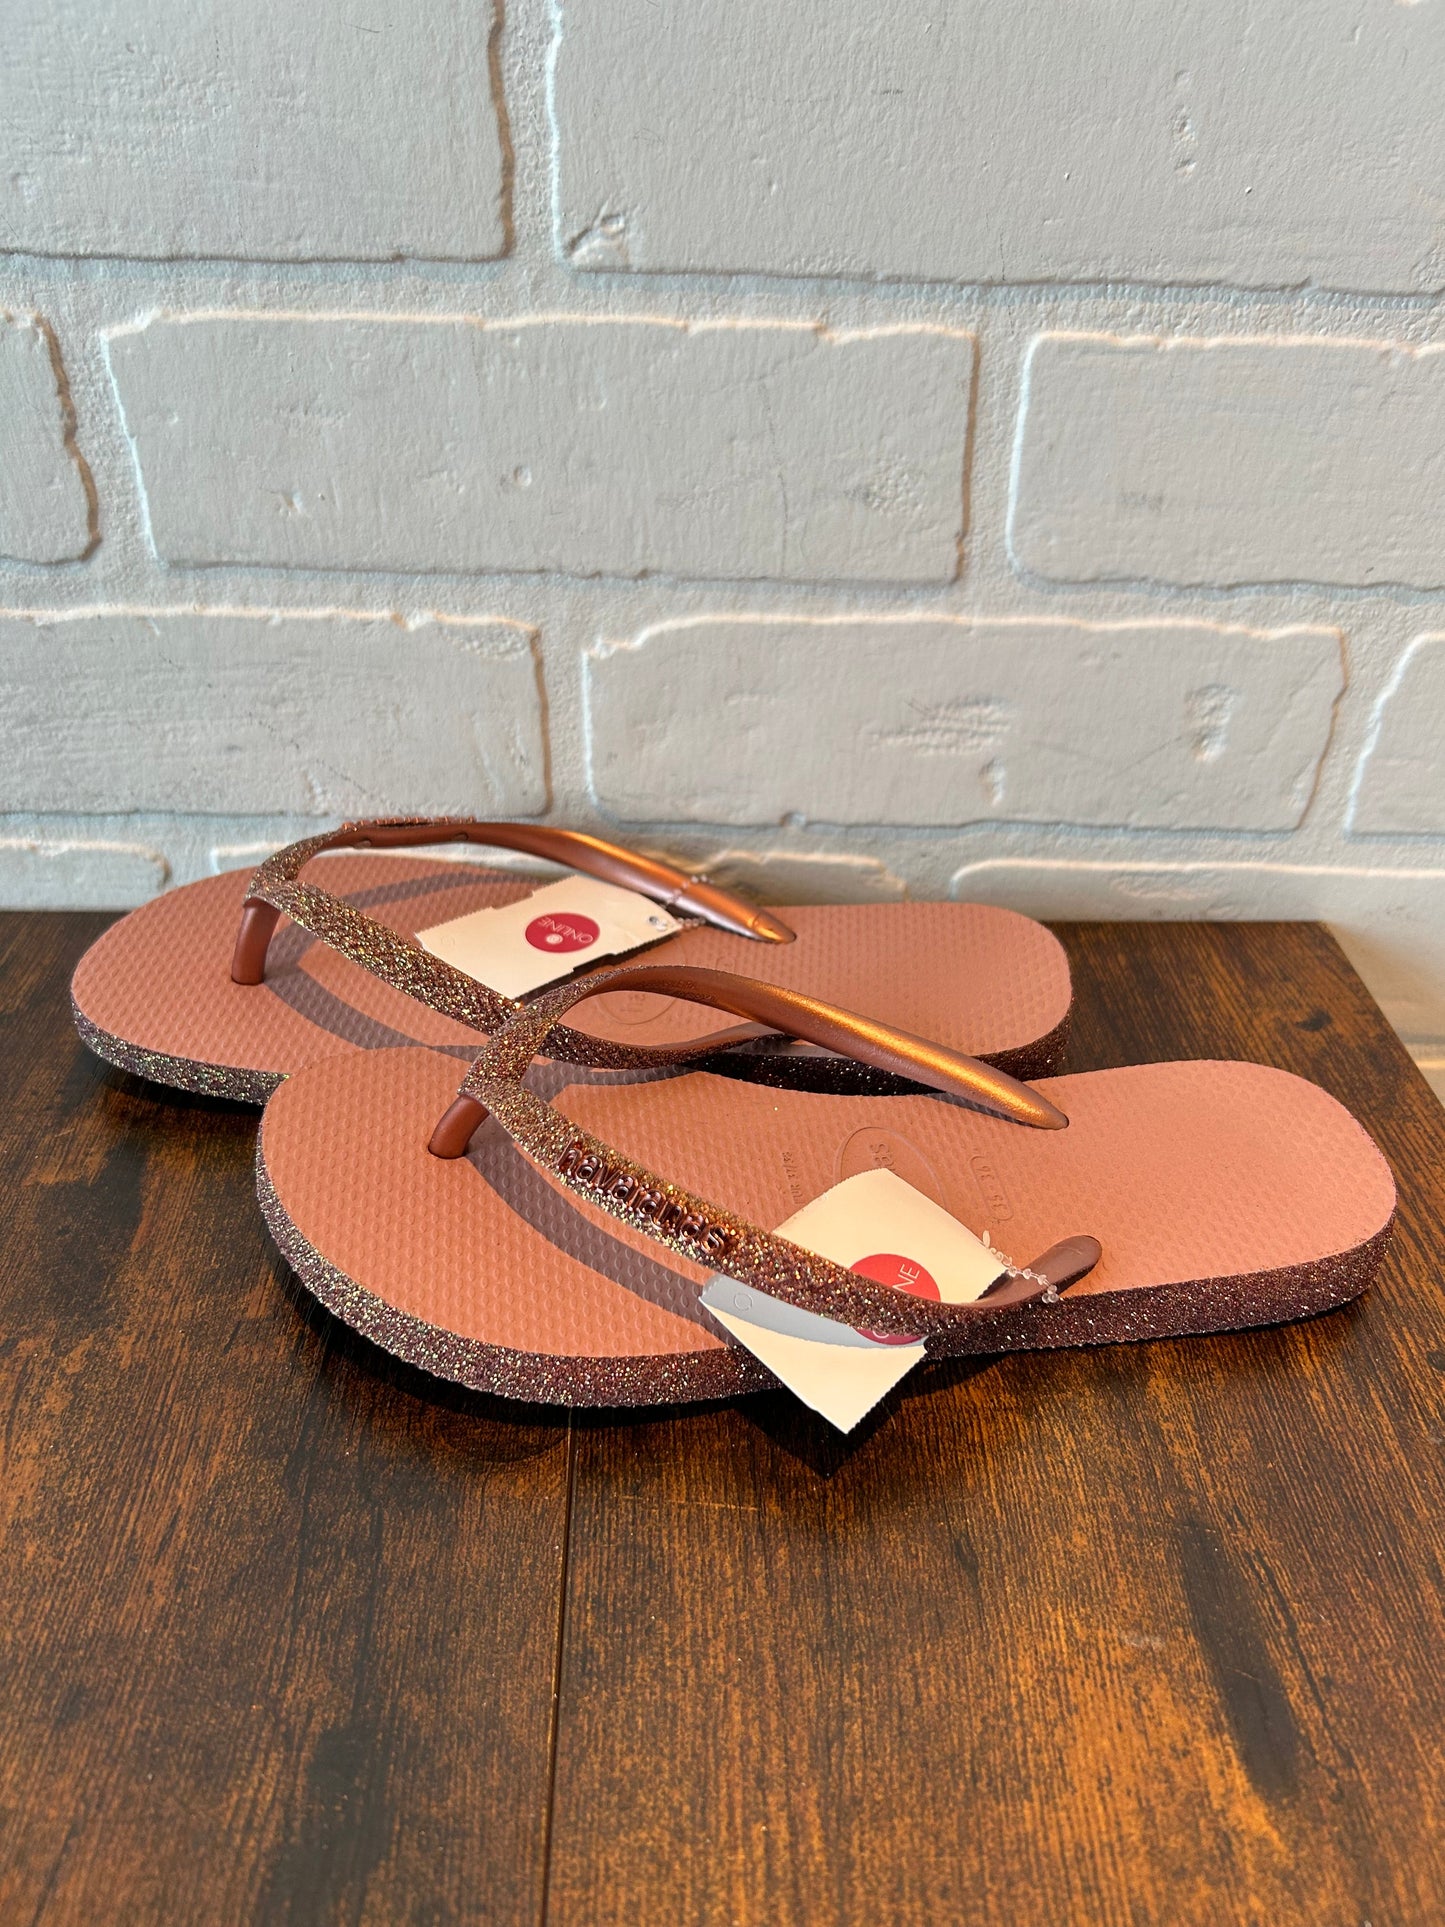 Gold Sandals Flip Flops Havaianas, Size 6